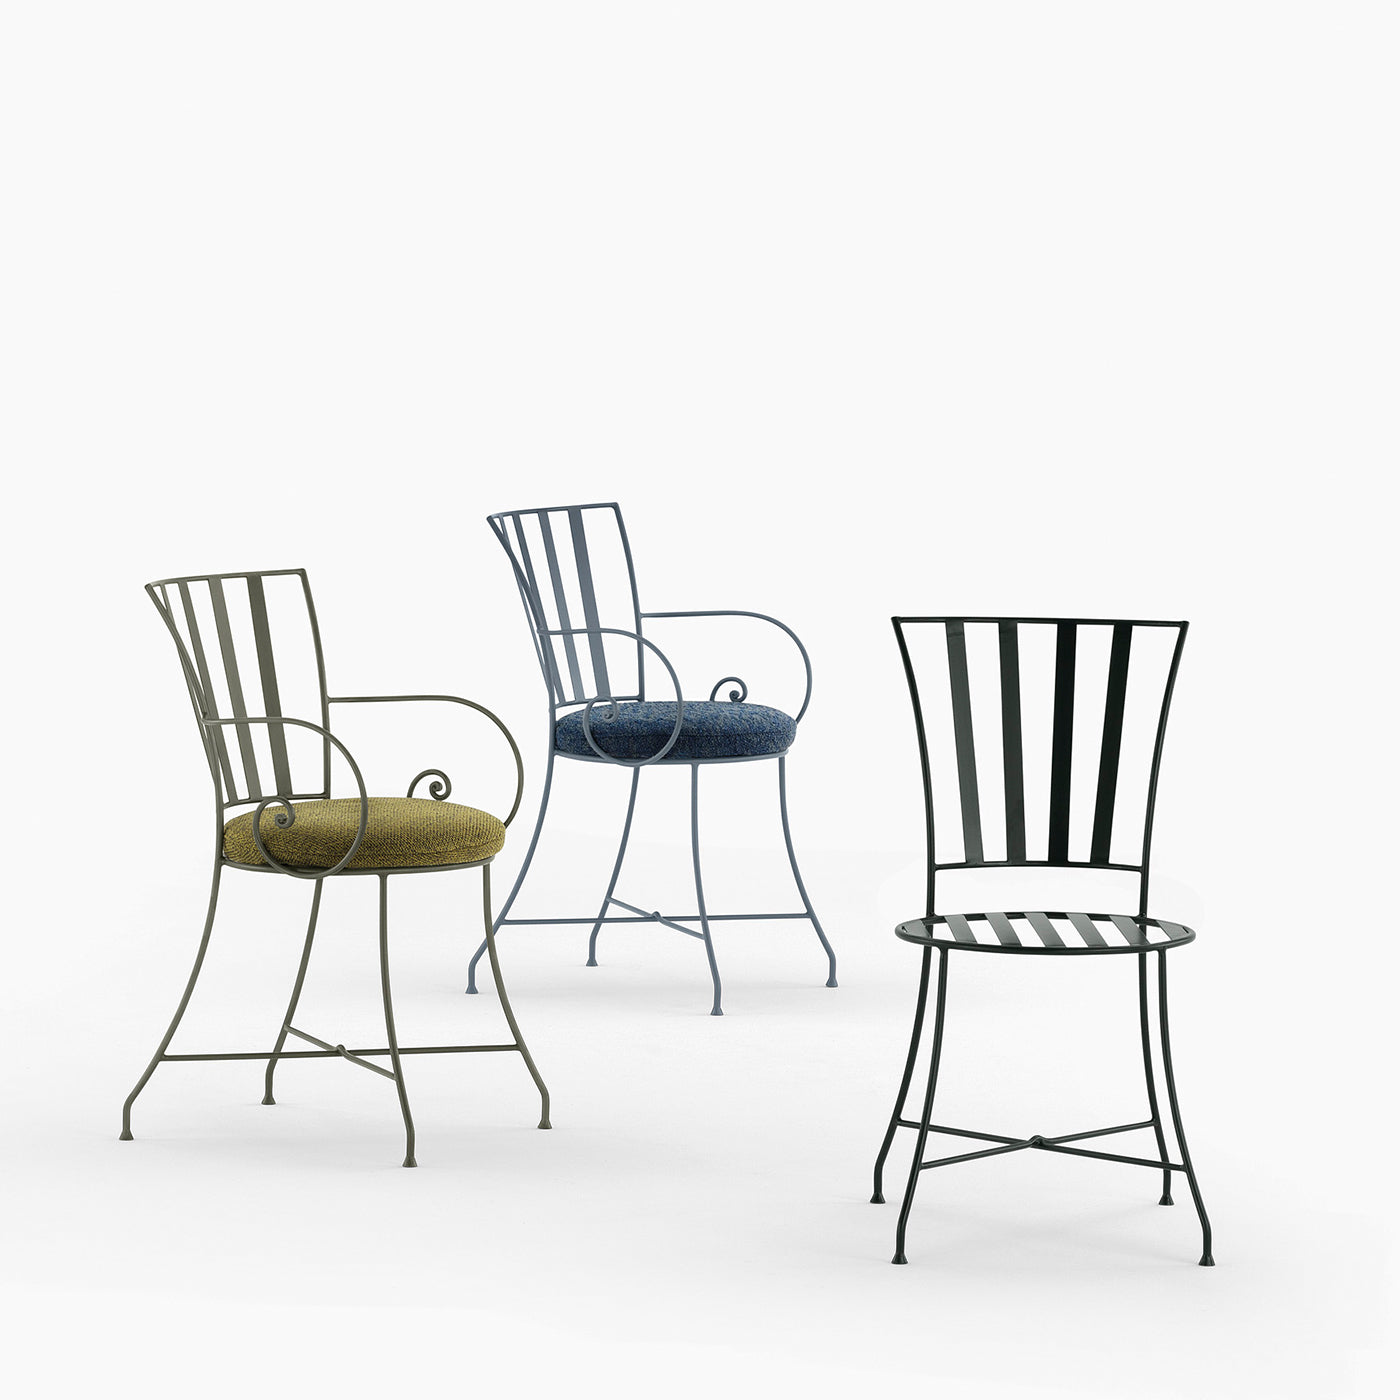 Attonita Wrought Iron Forest-Green Chair - Alternative view 1